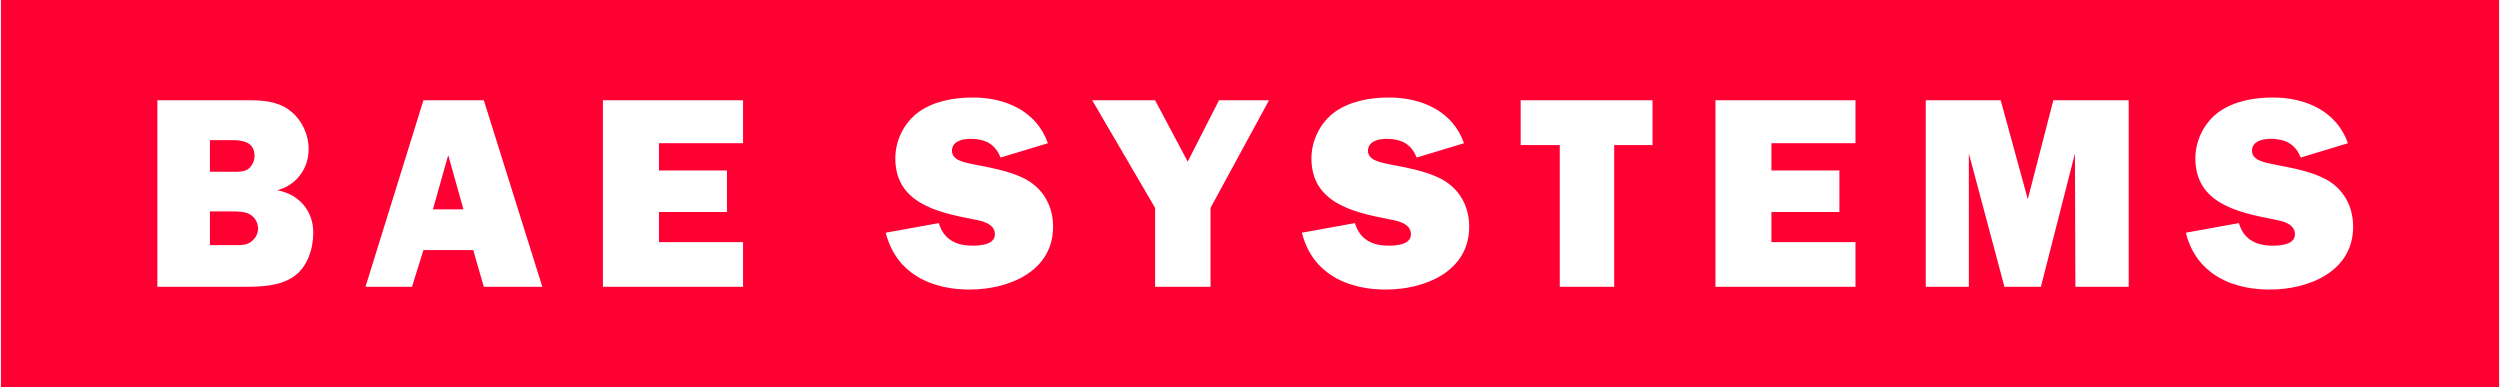 Logo-BAE Systems